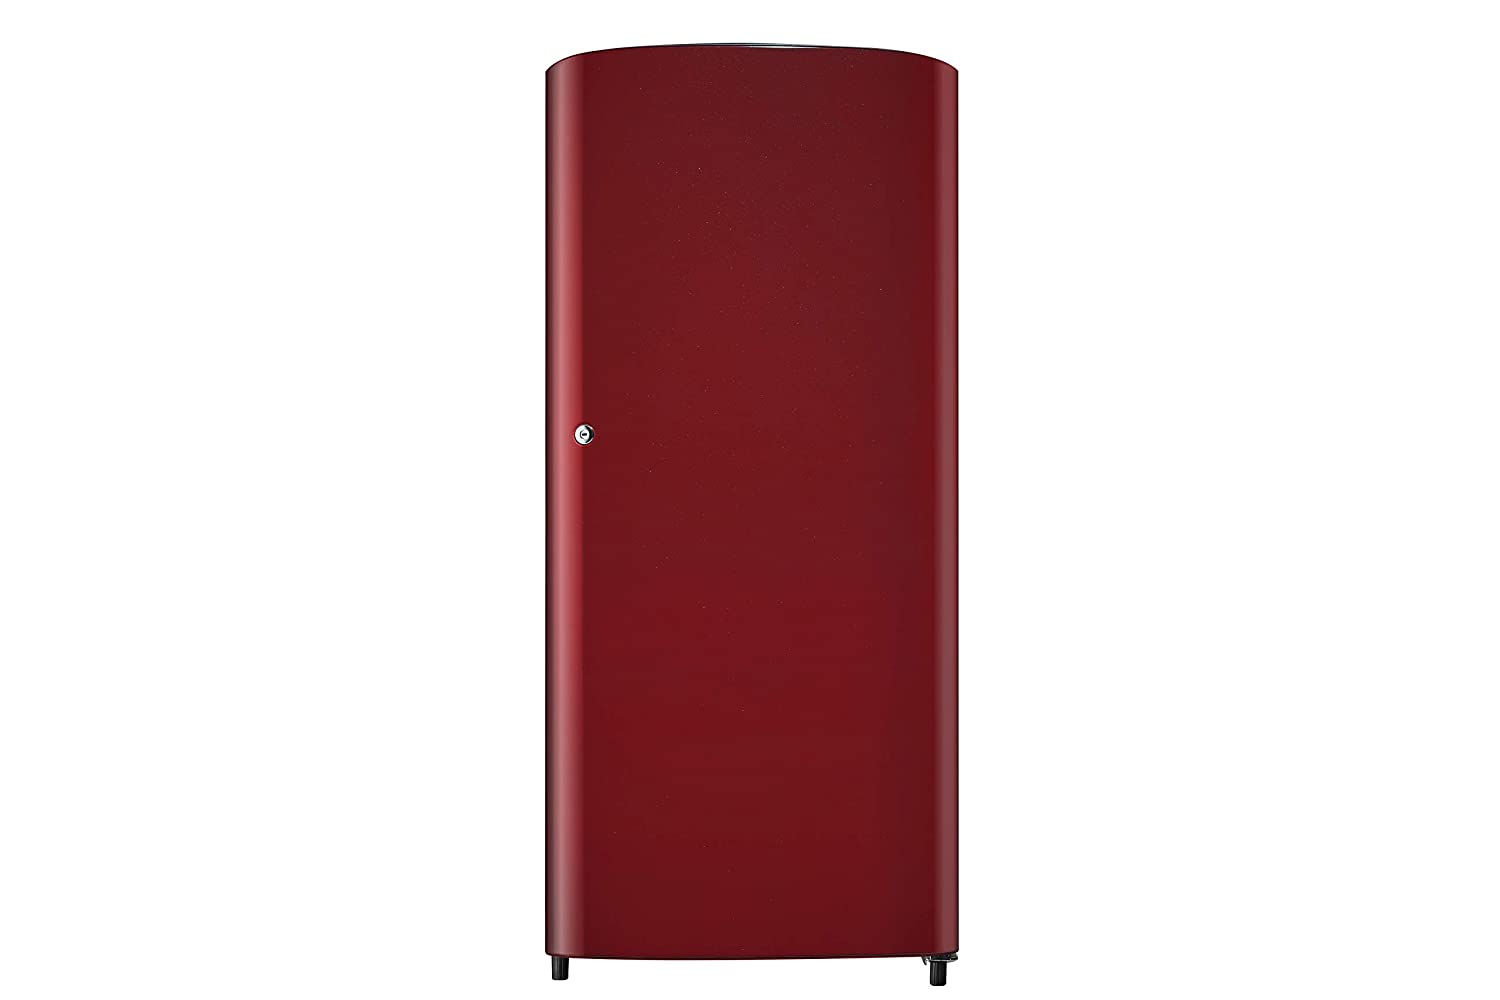 Samsung 192 L 1 Star Direct-Cool Single Door Refrigerator (RR19R20CARH/NL, Scarlet Red) - Mahajan Electronics Online